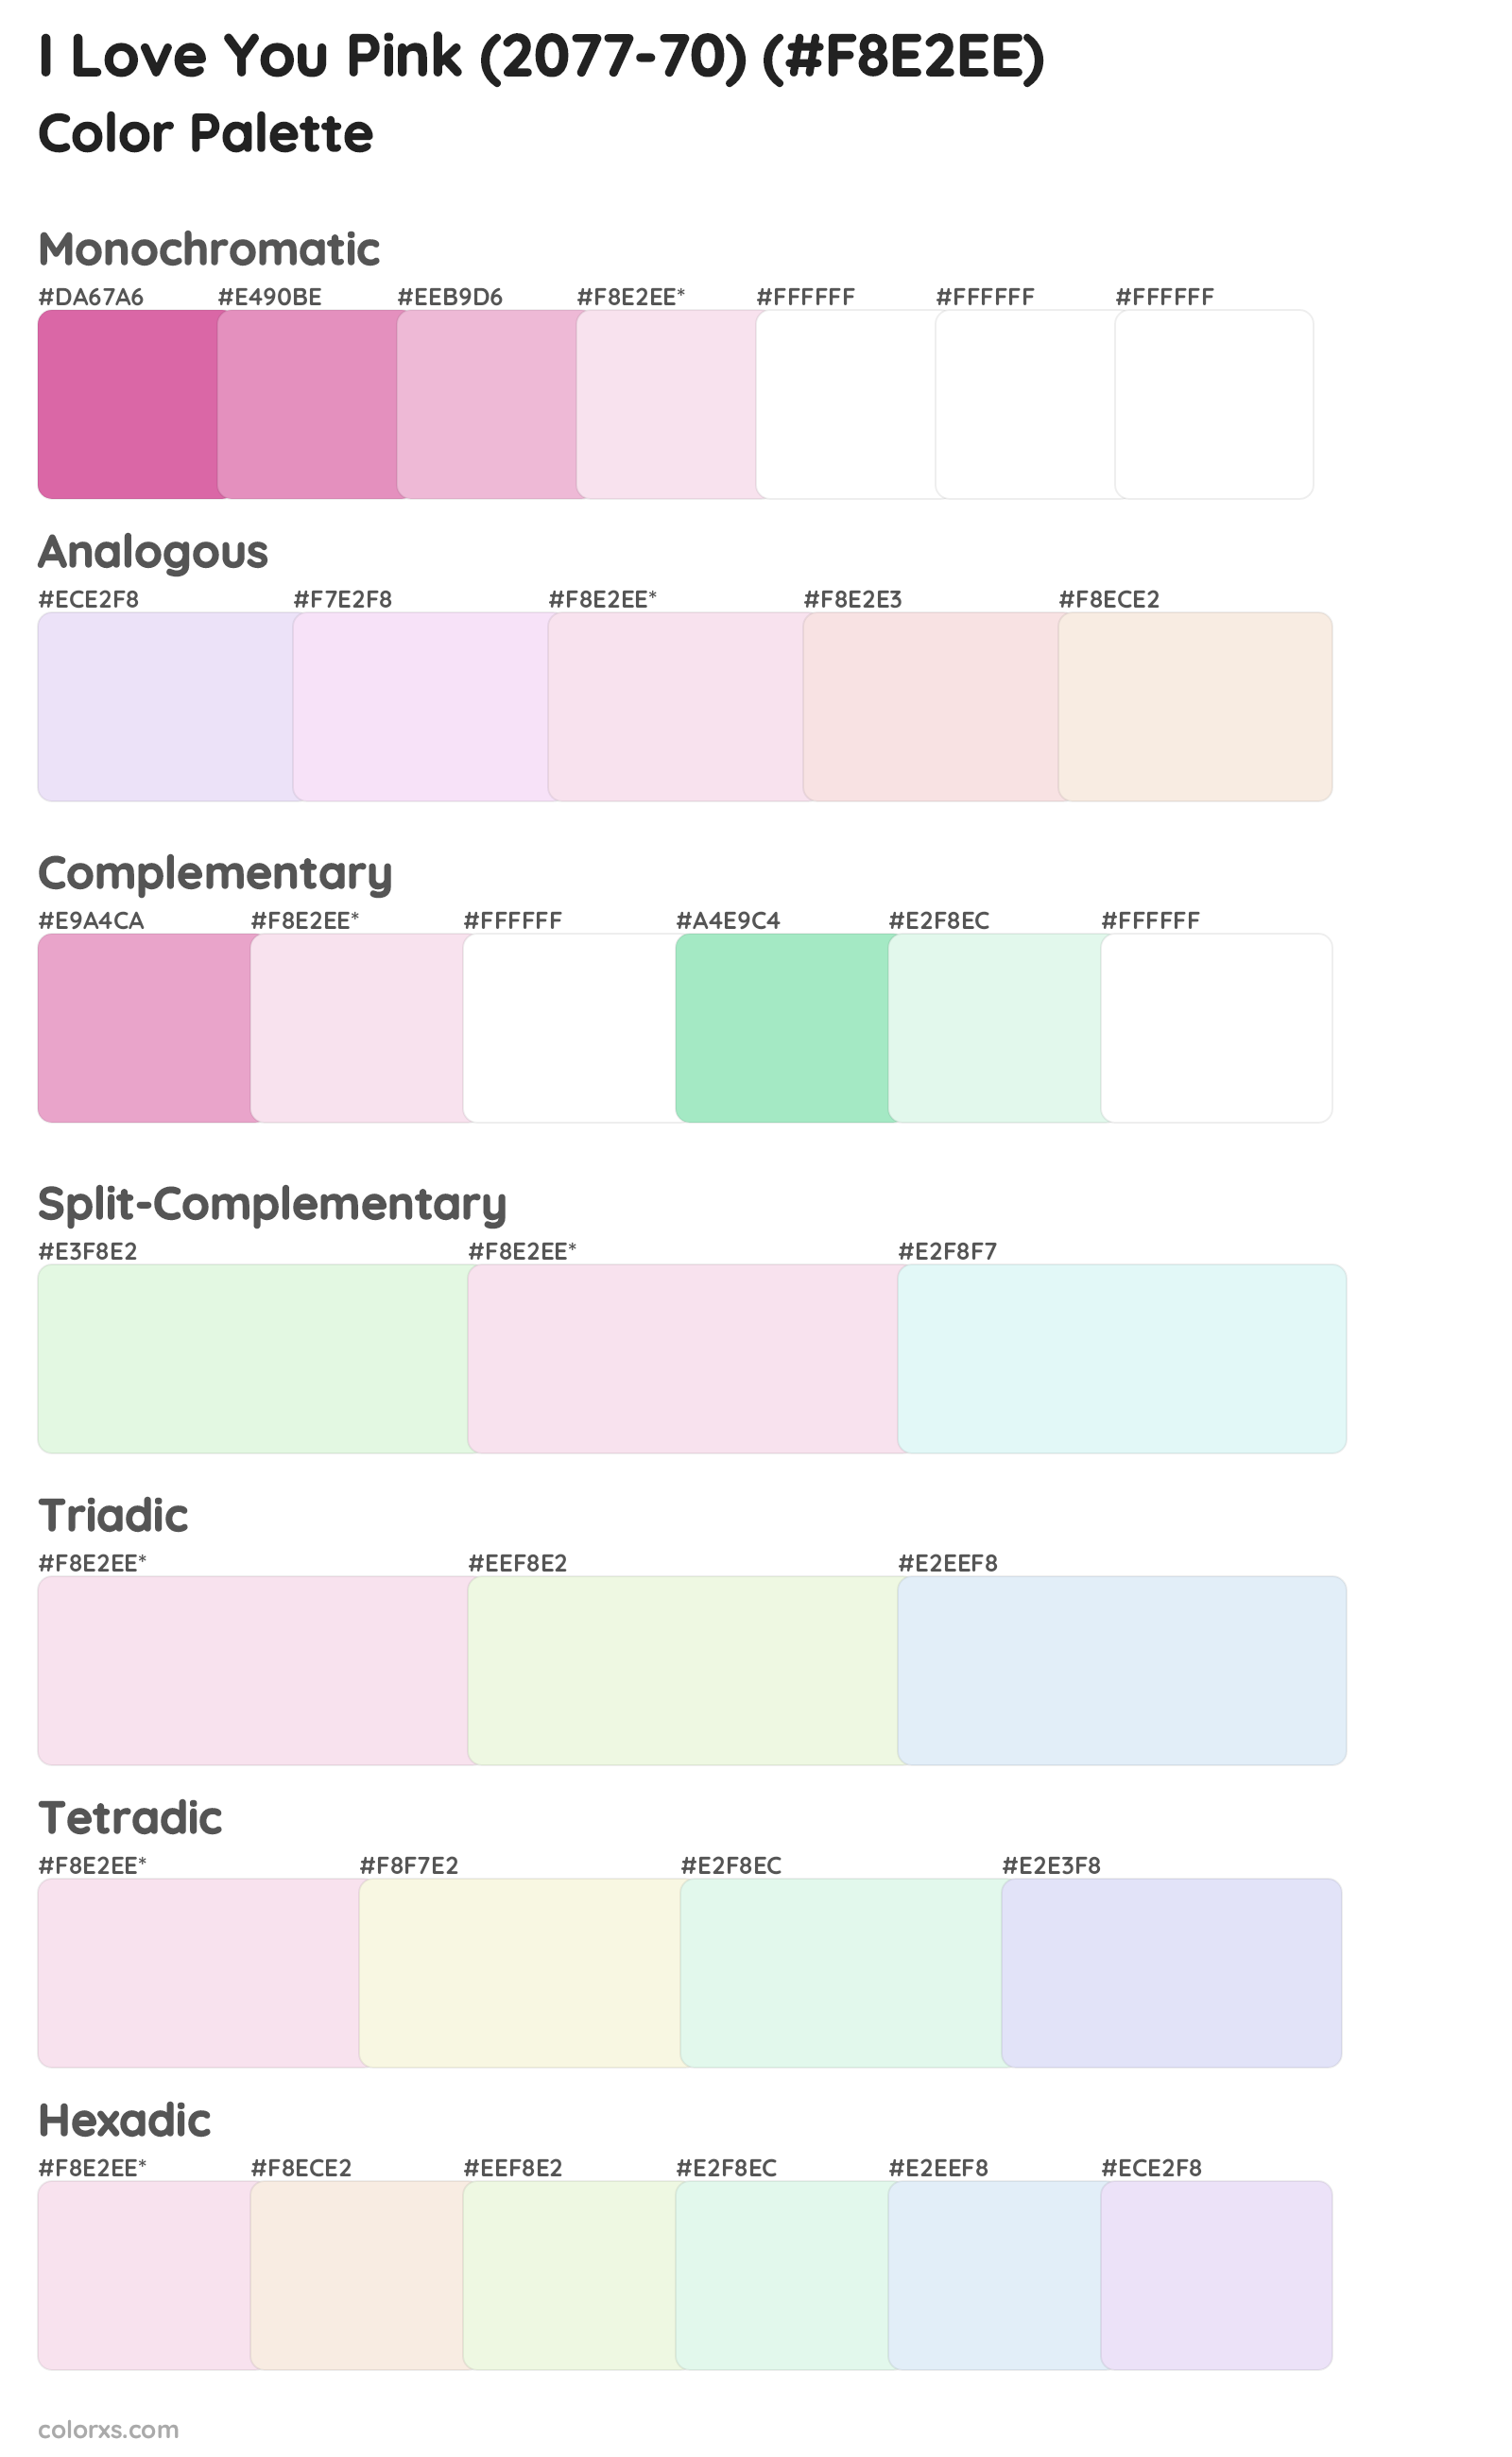 I Love You Pink (2077-70) Color Scheme Palettes